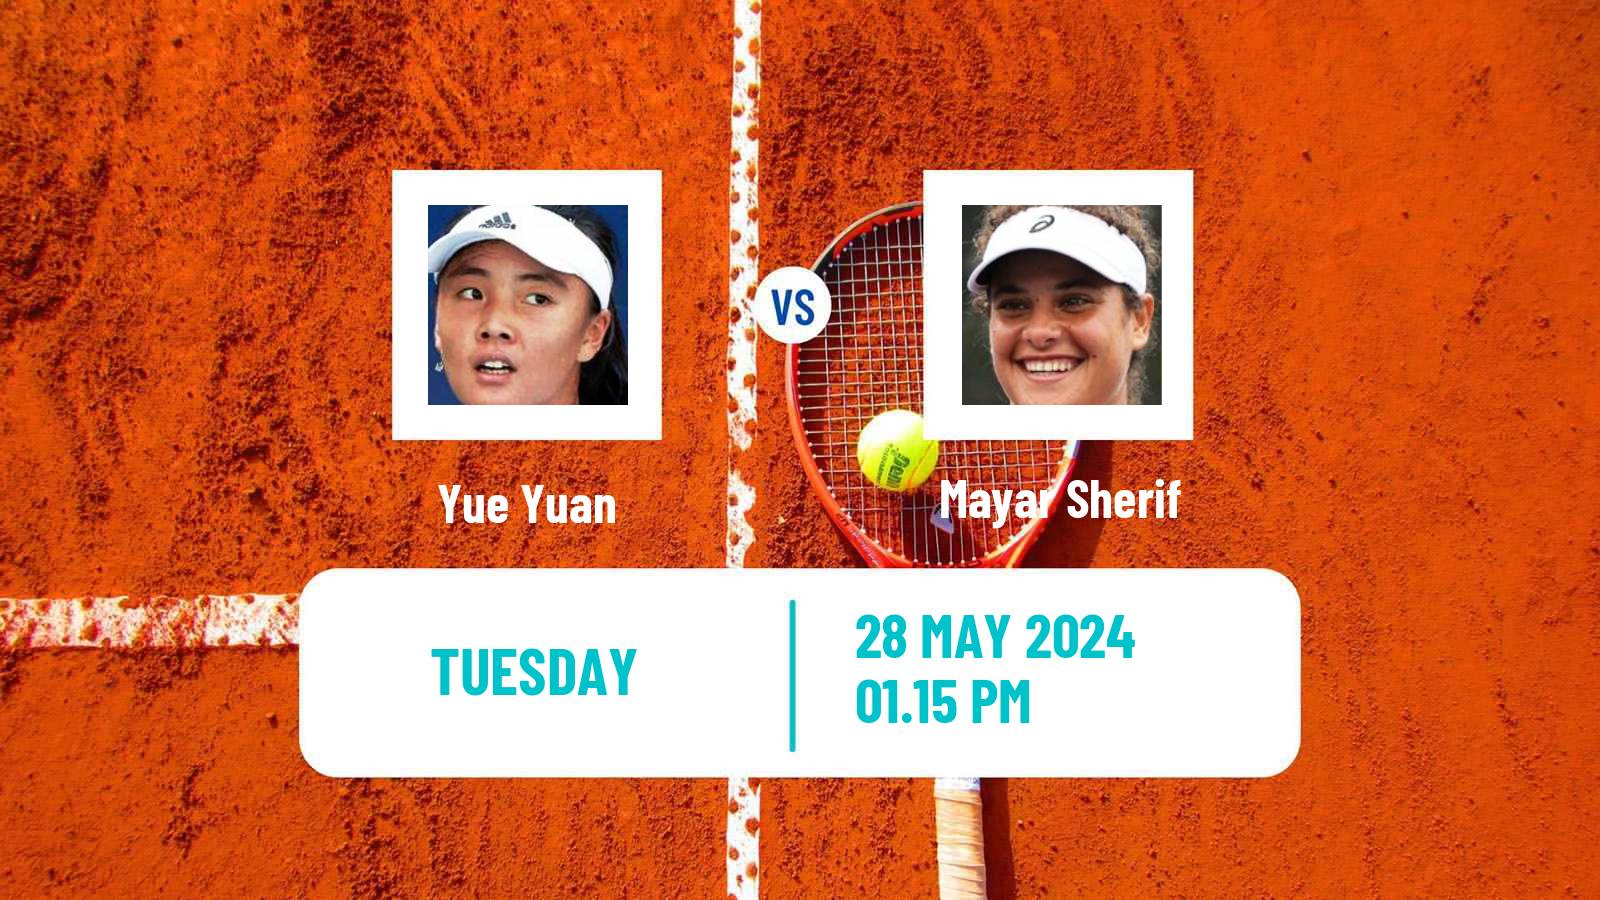 Tennis WTA Roland Garros Yue Yuan - Mayar Sherif